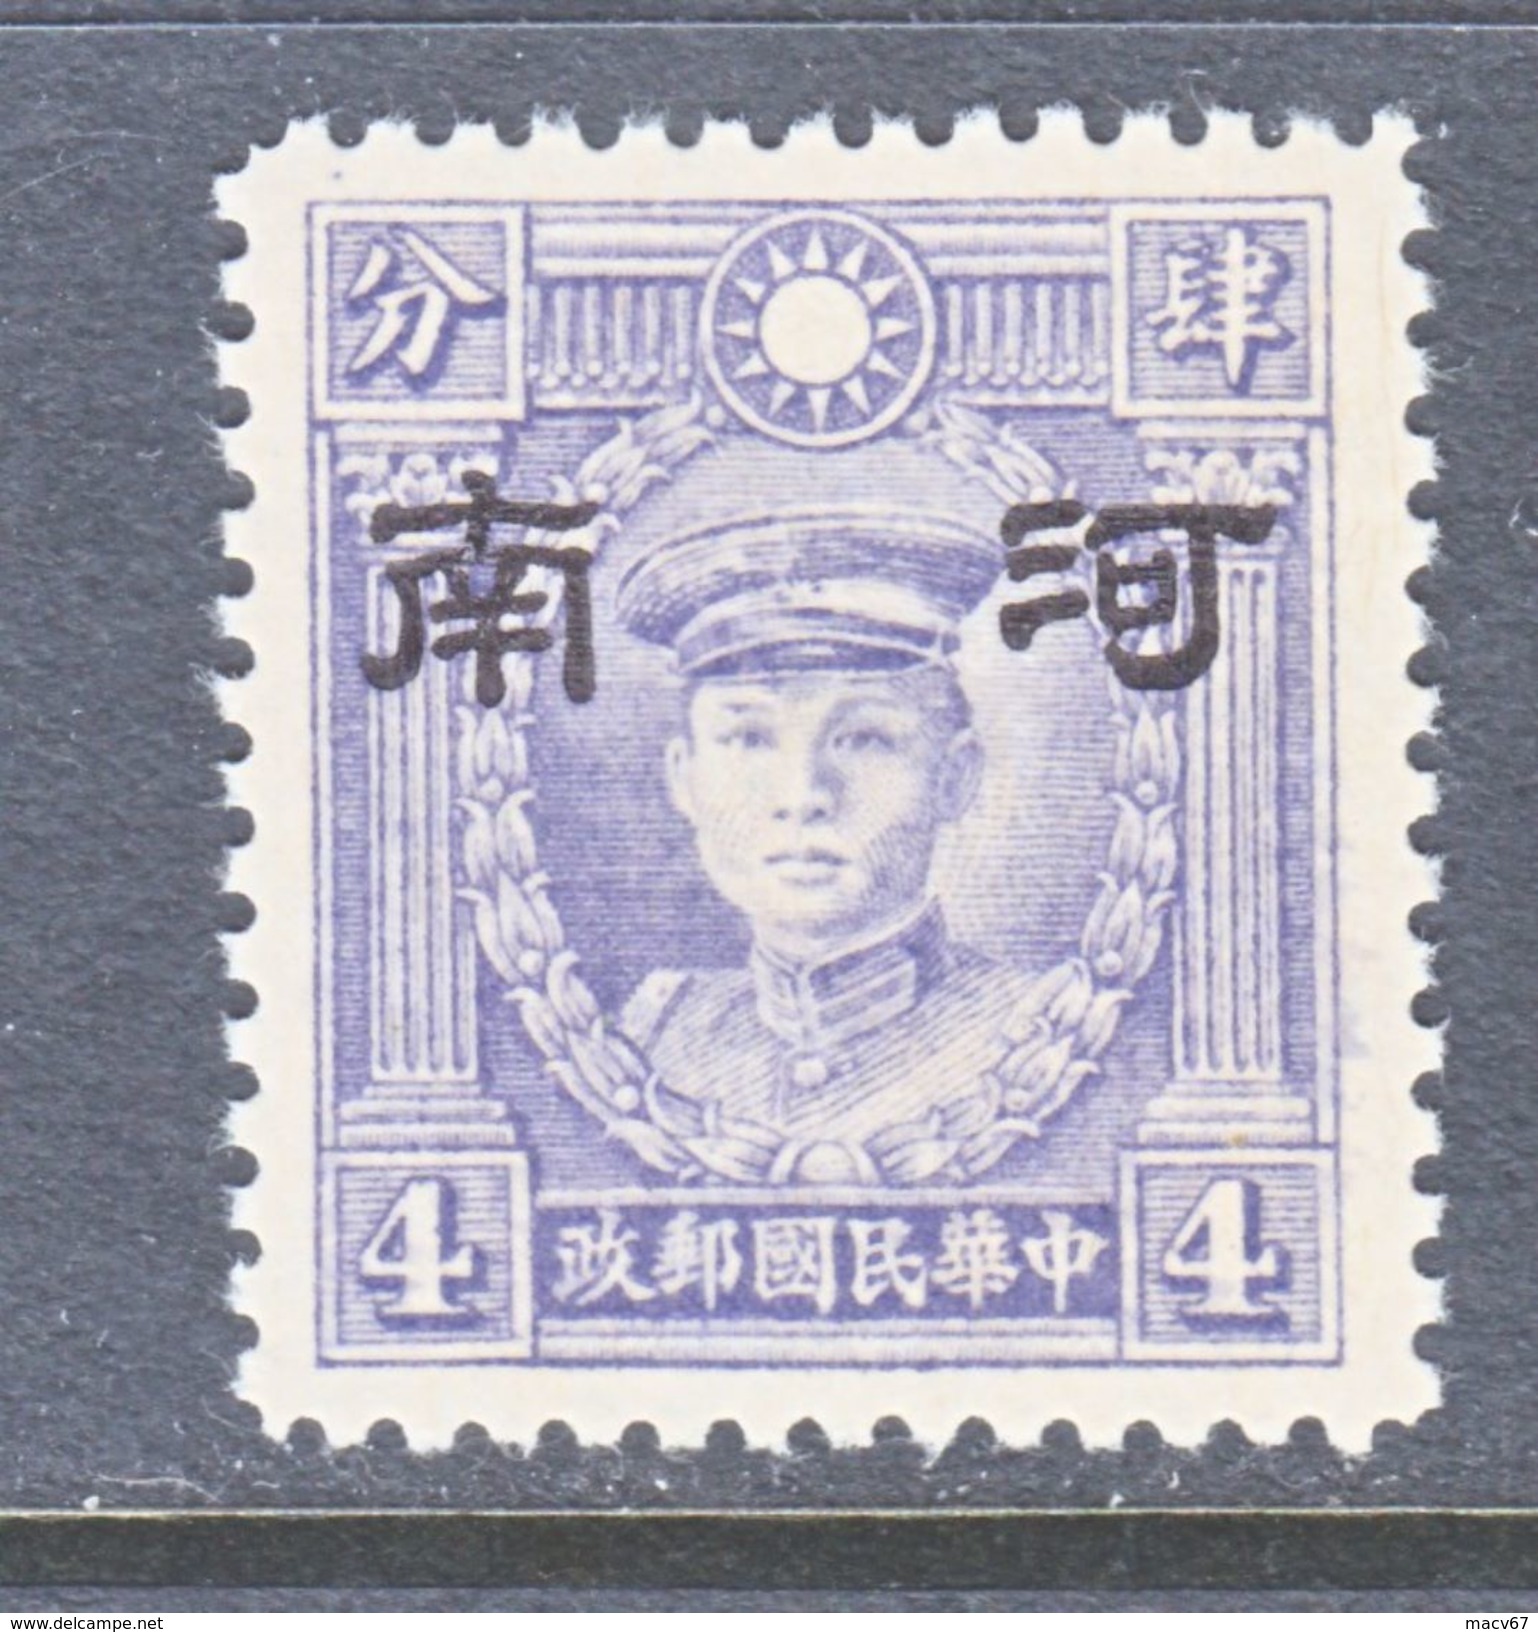 JAPANESE OCCUPATION   HONAN  3 N 46  Type  II  Perf. 12 1/2  SECRET  MARK    *  No Wmk. - 1941-45 Chine Du Nord